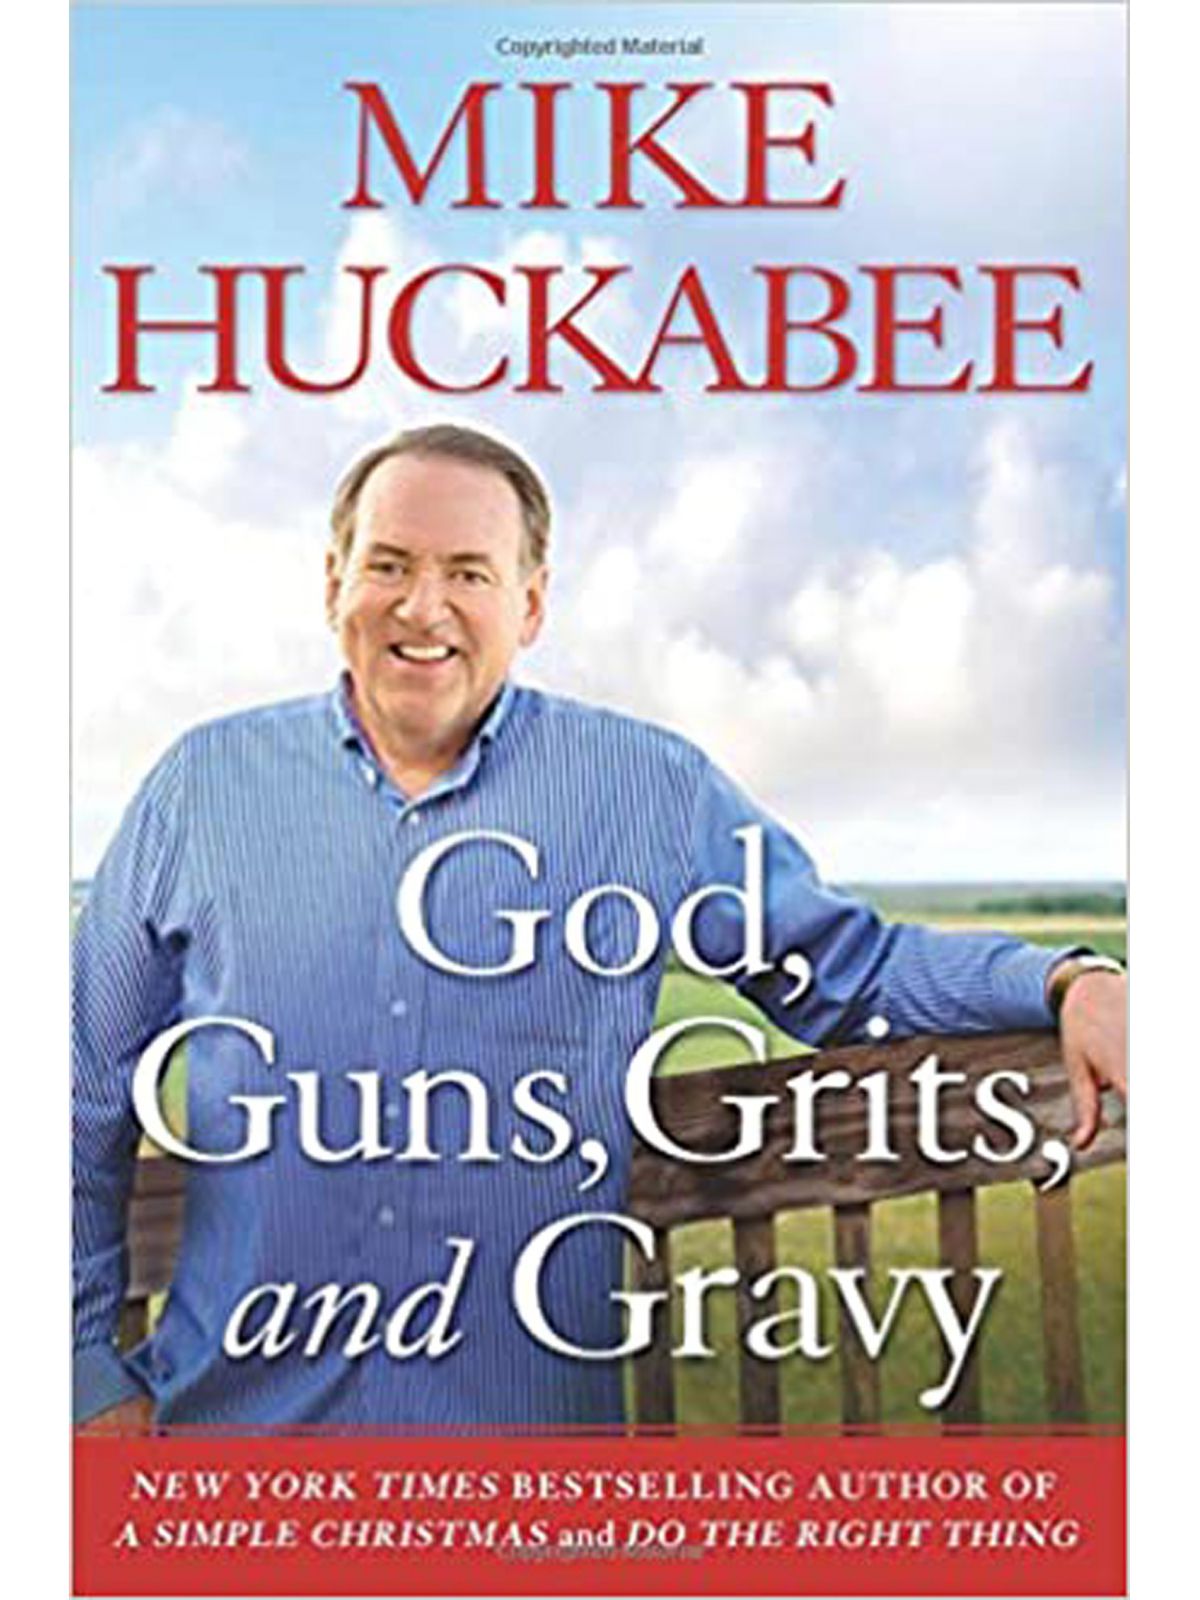 GODS GUNS GRITS & GRAVY HUCKABEE, MIKE Купить Книгу на Английском